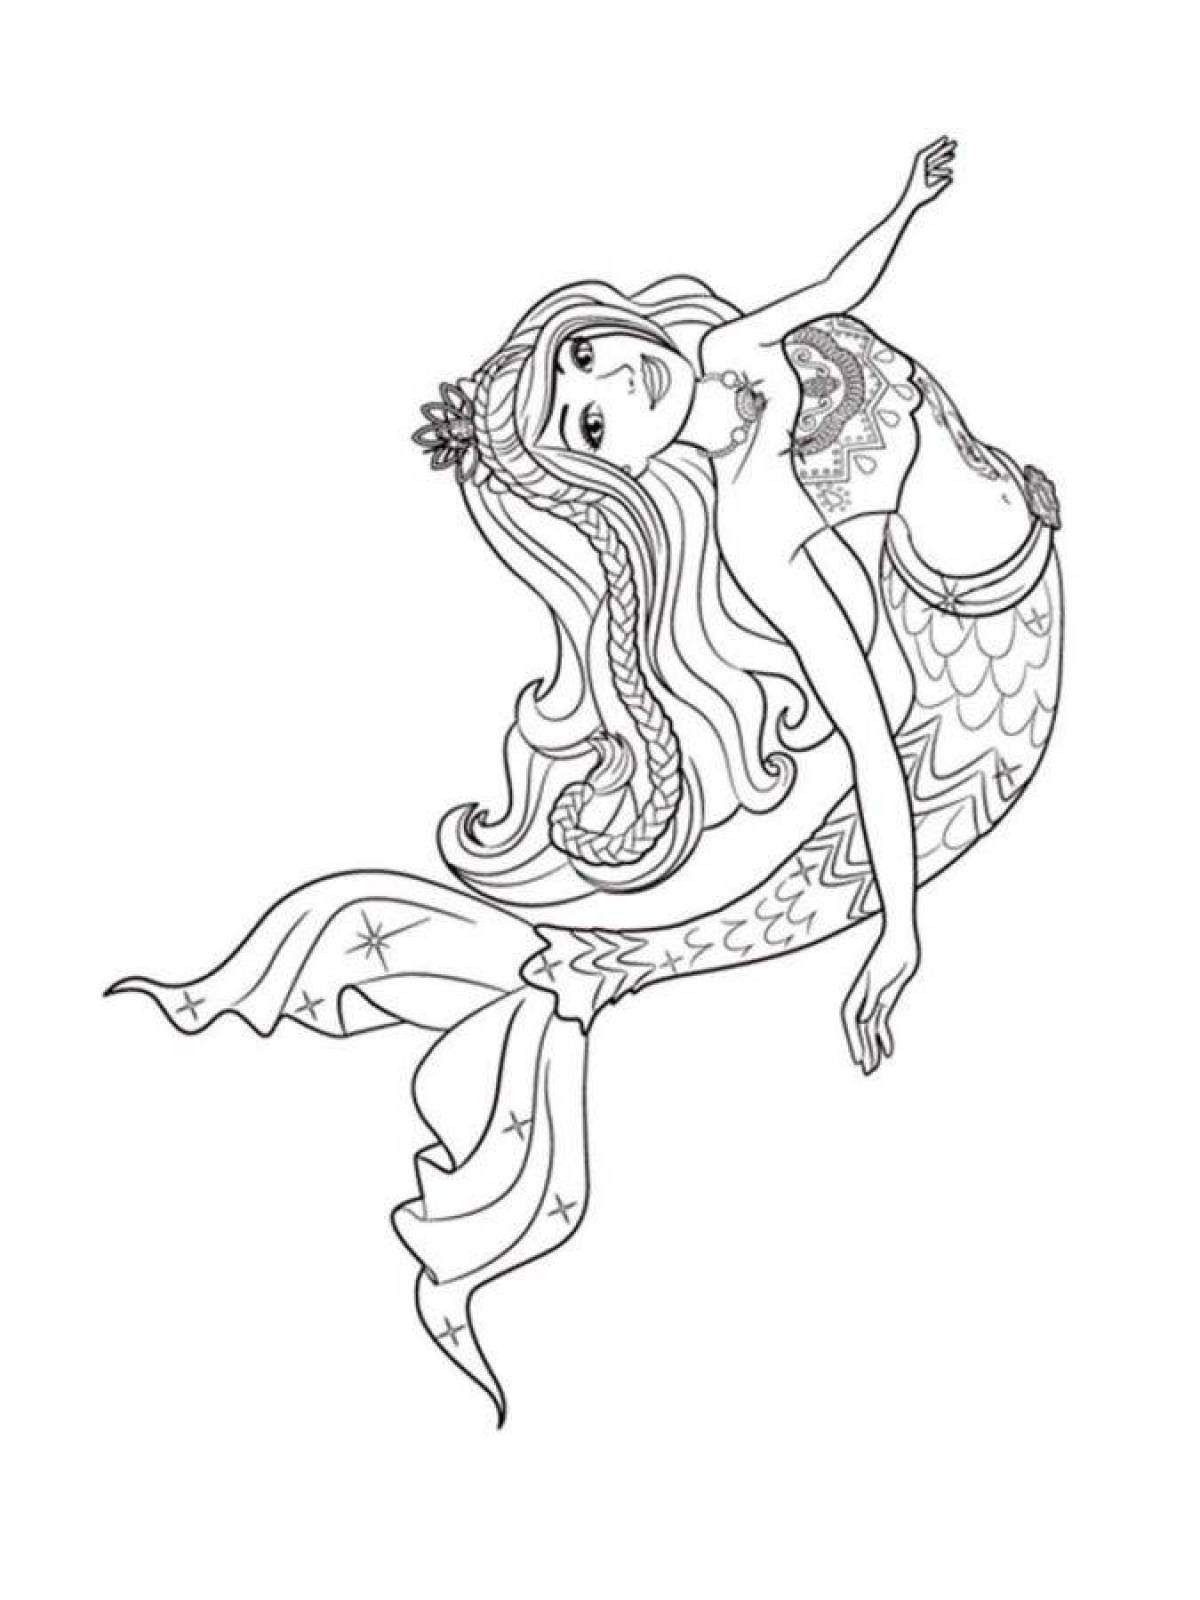 Animated barbie mermaid coloring page